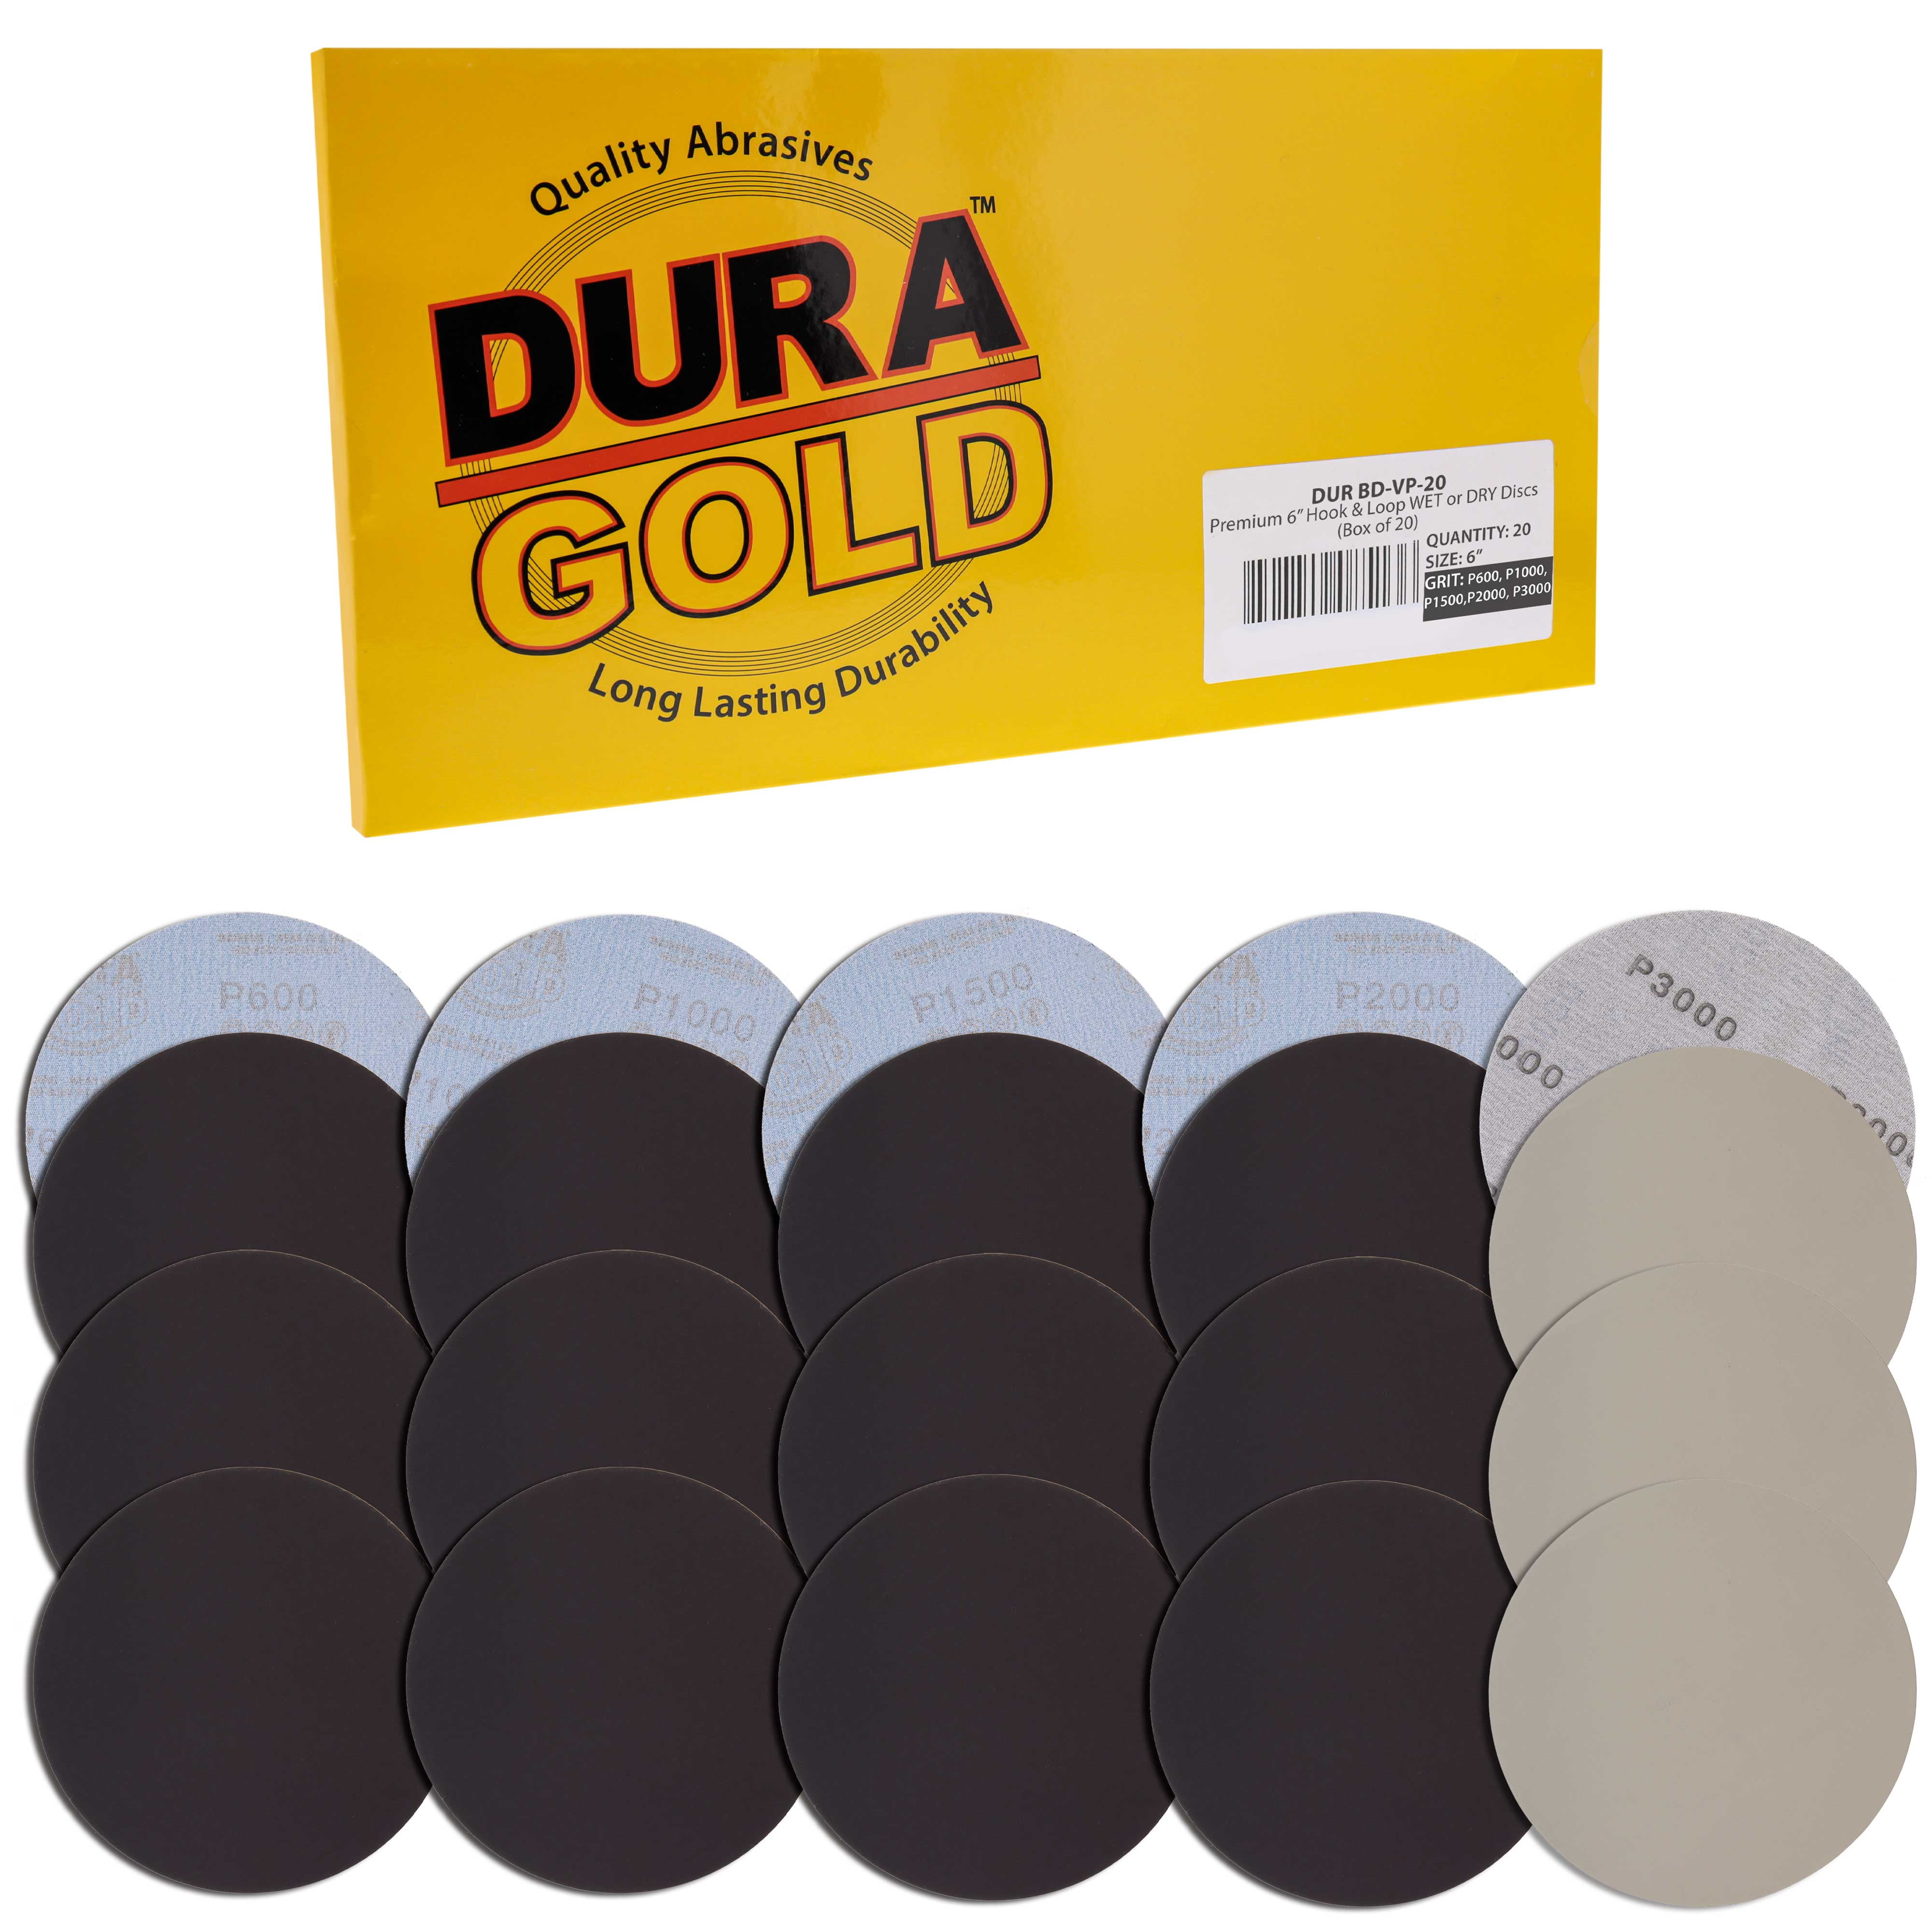 20Pcs 6" 3000 Grit Sanding Discs Polishing Pad Sanding Paper Sheets for Abras… 